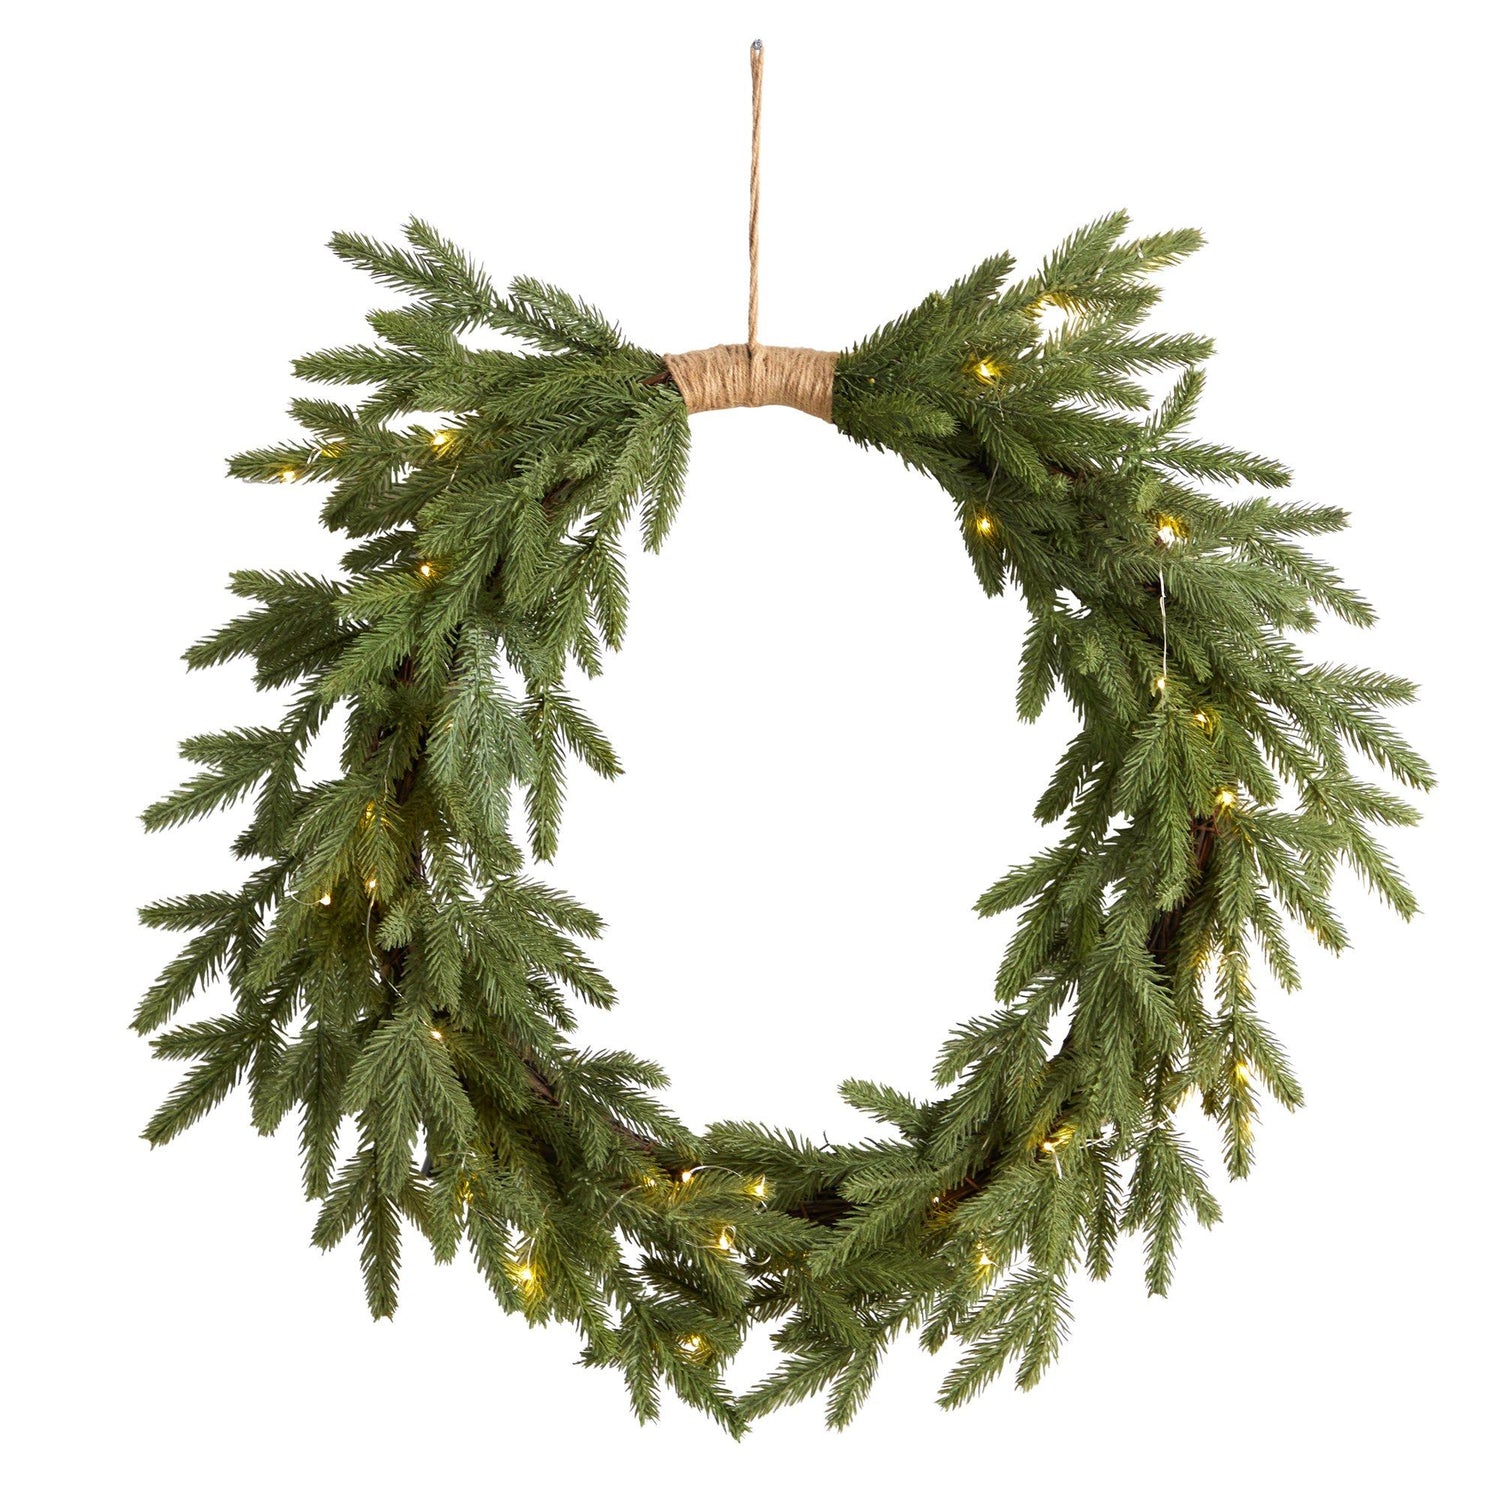 24" Holiday Christmas Pre-Lit Cascading Pine Wreath"